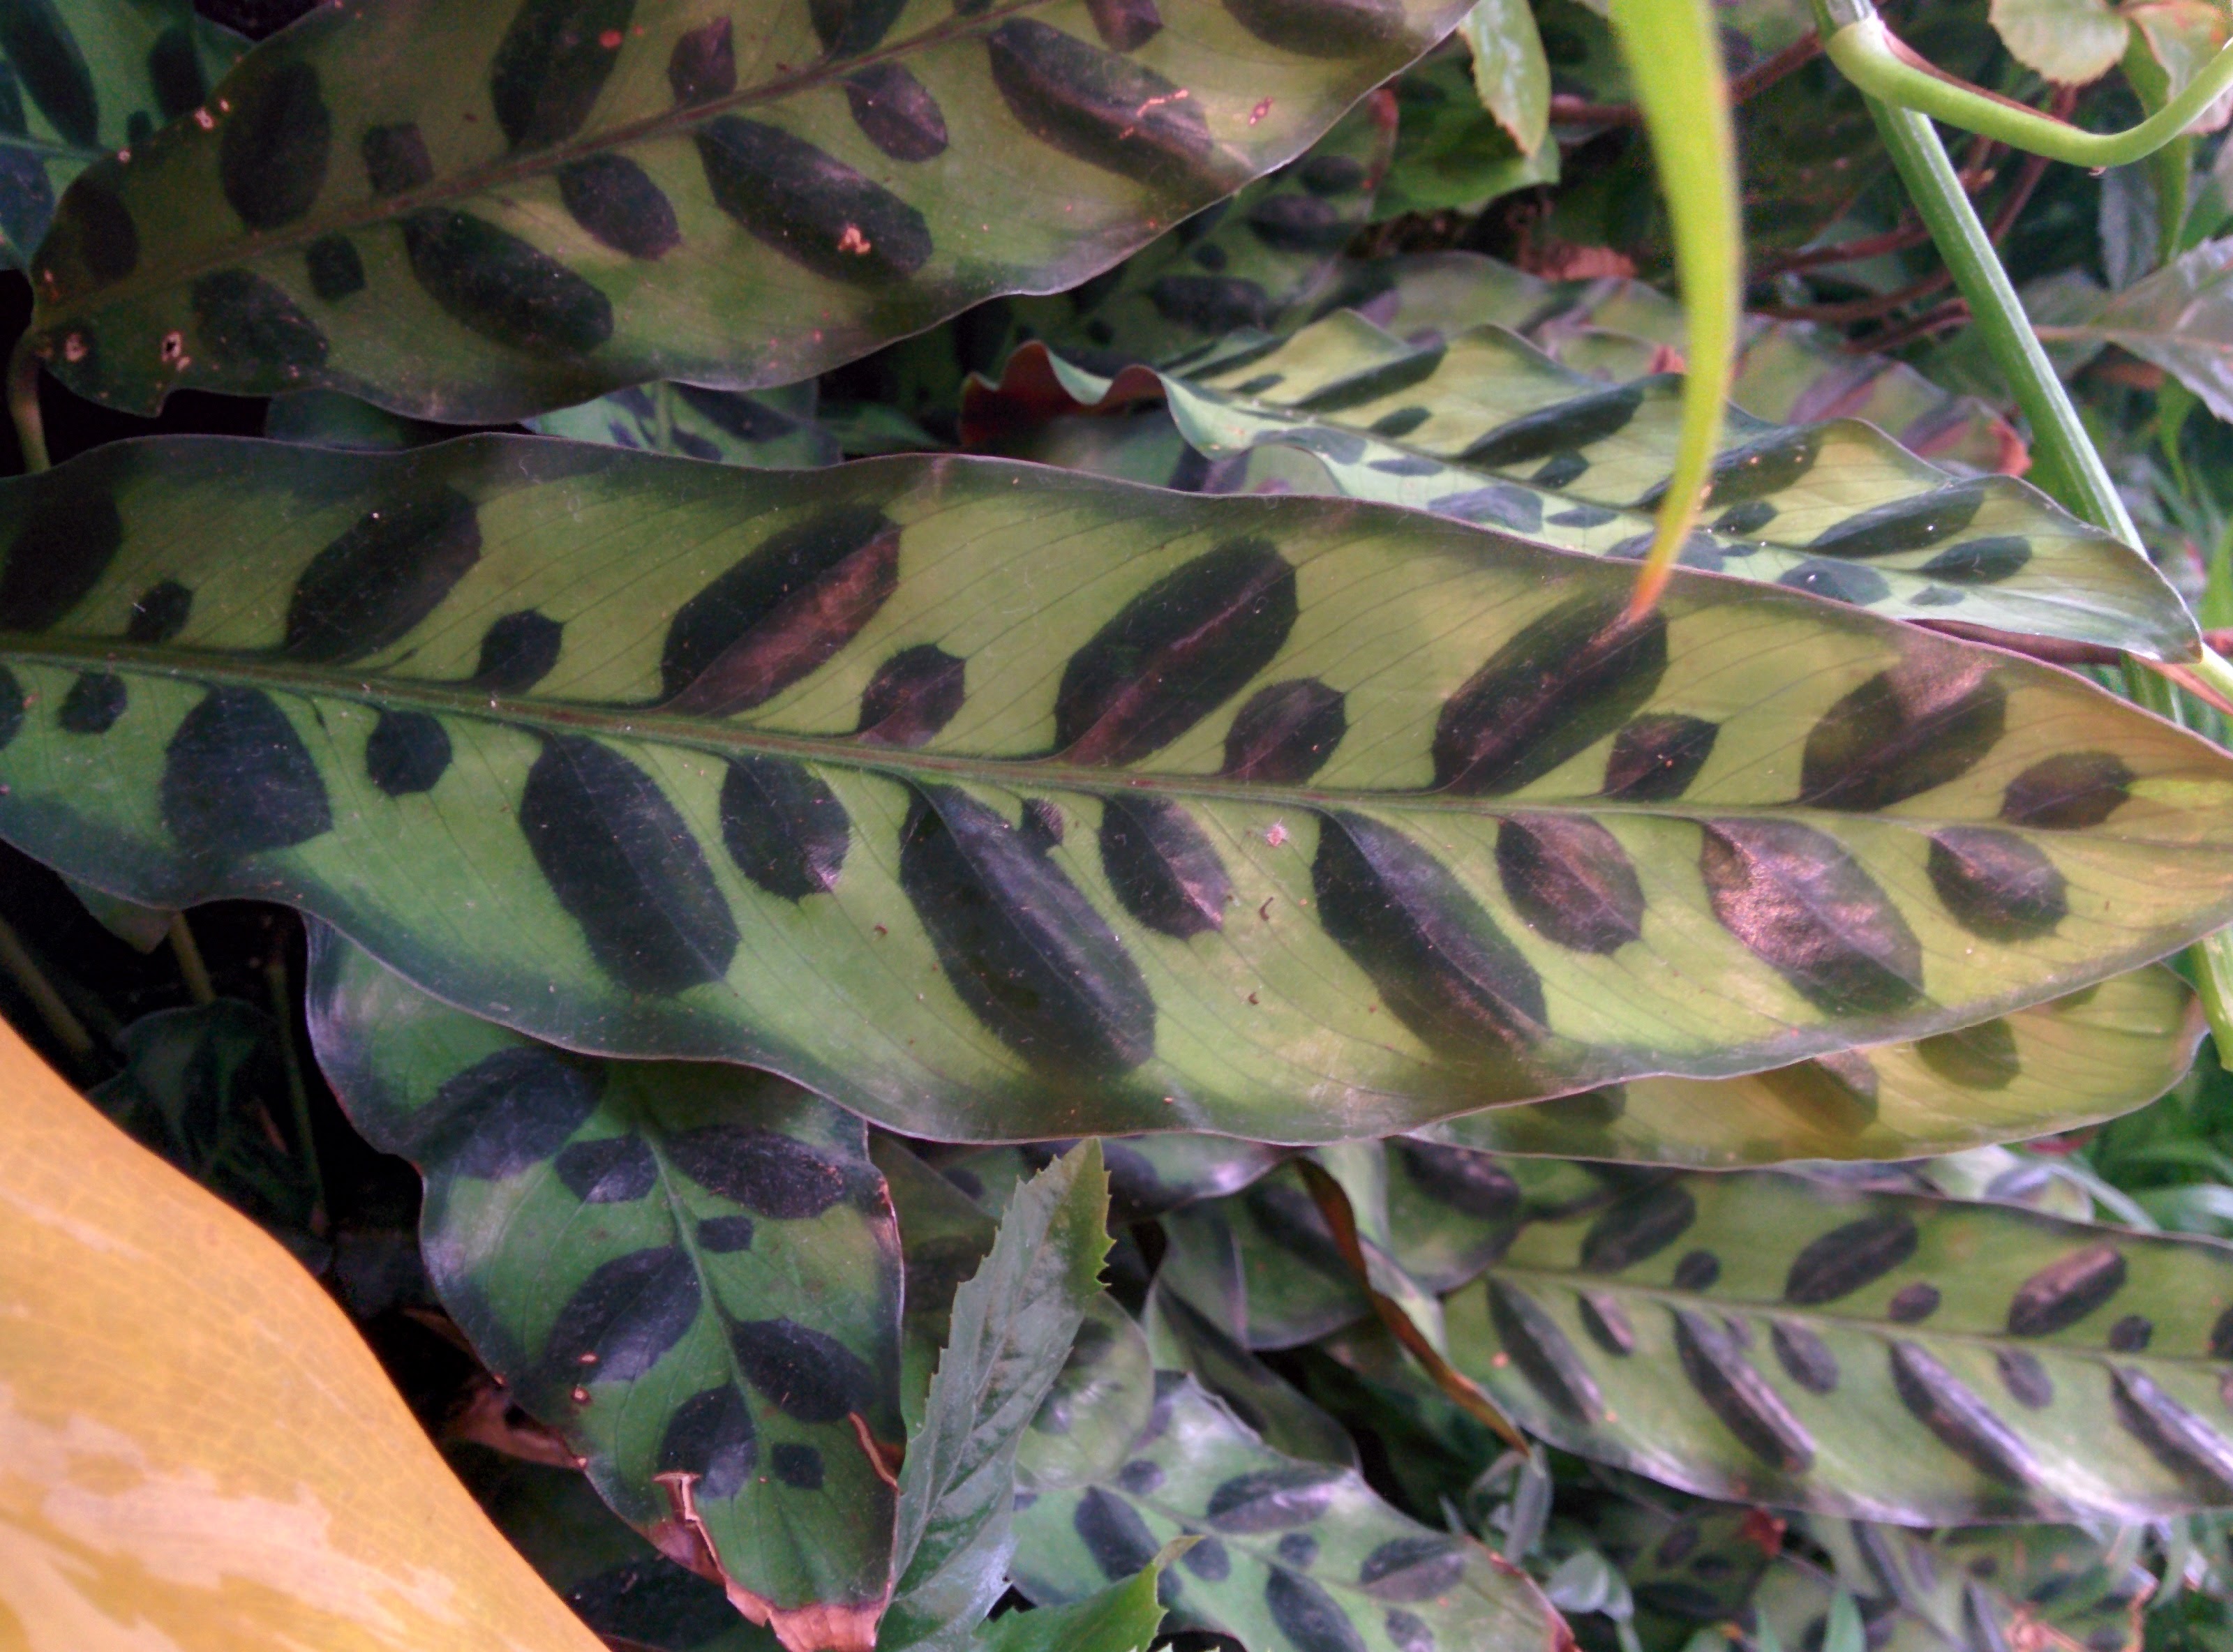 IMG_20151110_090002.jpg 잎속의 잎... 검은색 무늬 잎의 실내식물... 화살깃파초(Calathea makoyana)